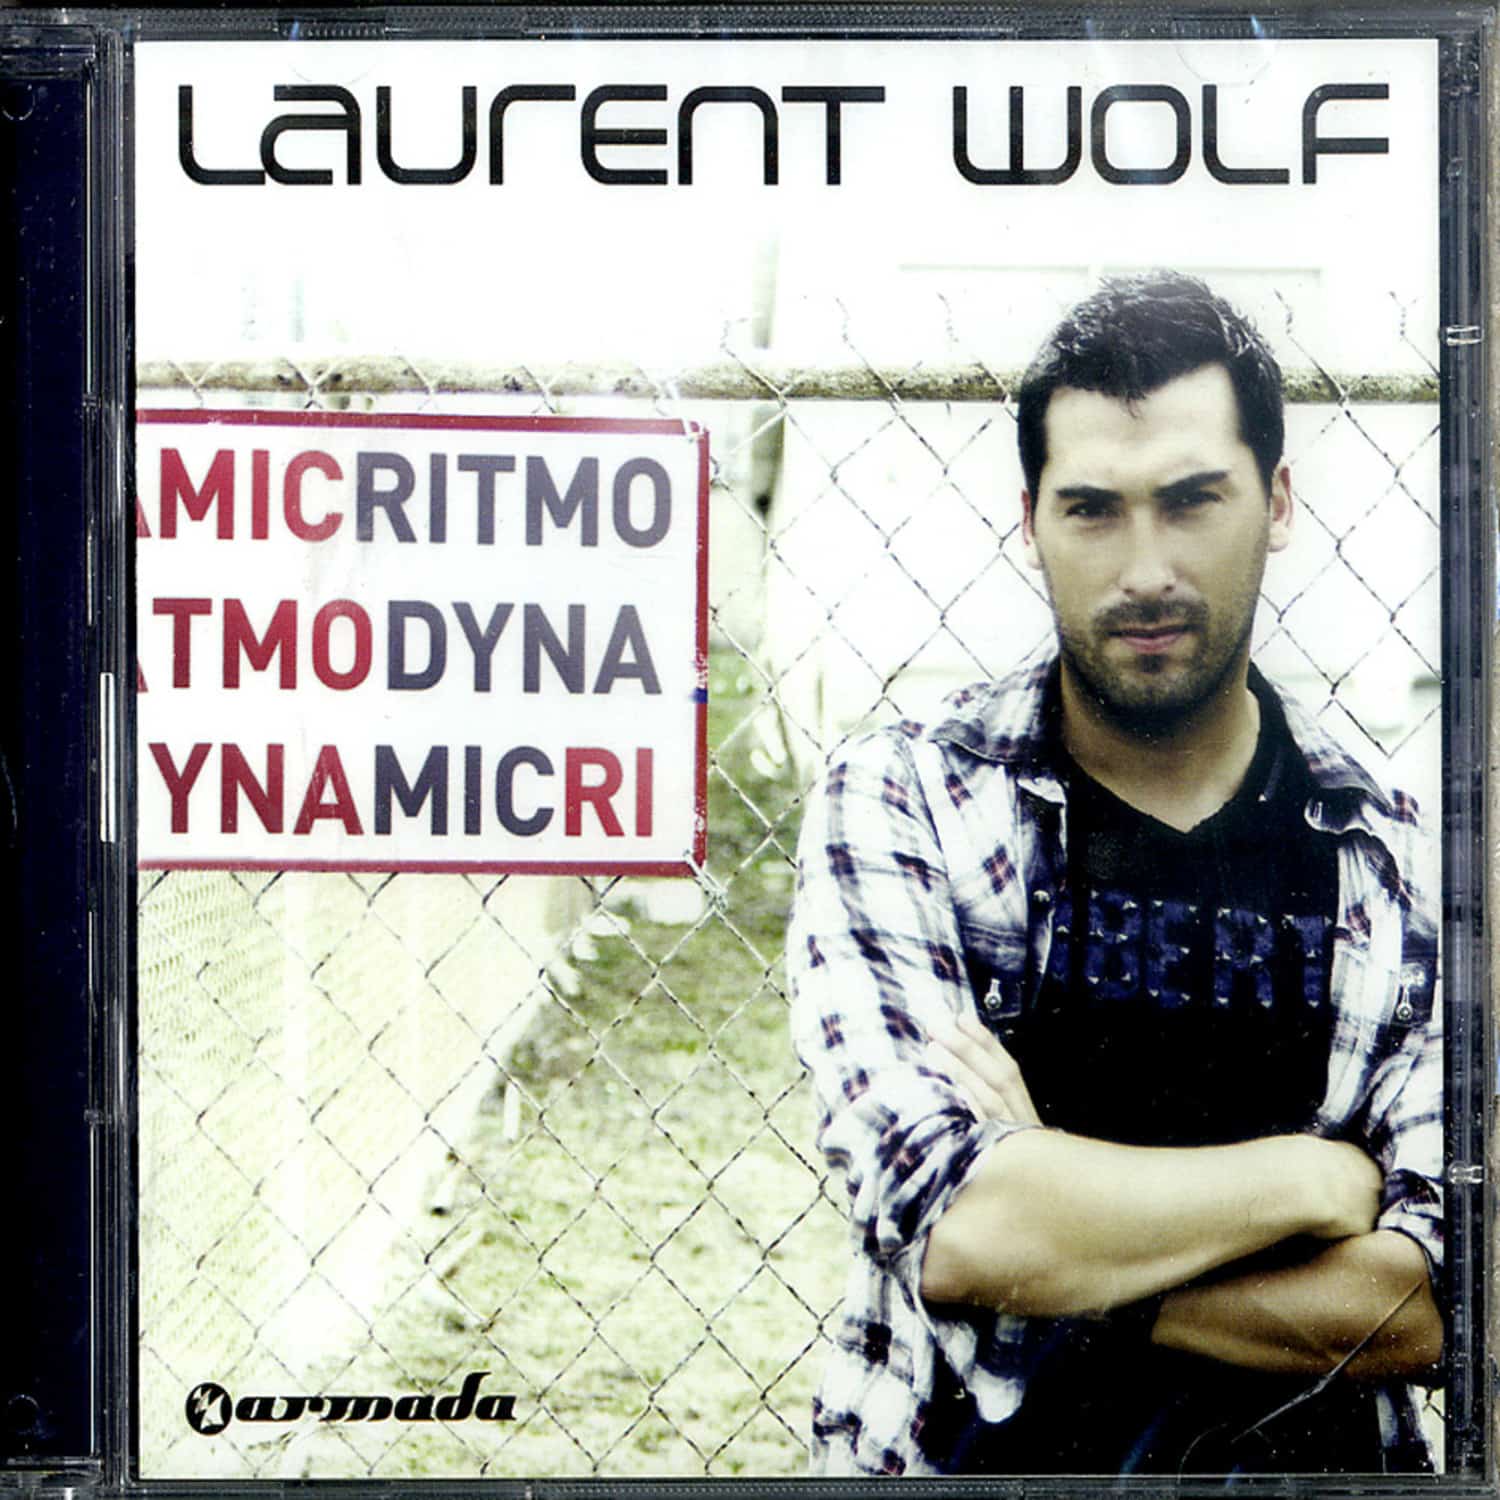 Laurent Wolf - RITMO / DYNAMIC 